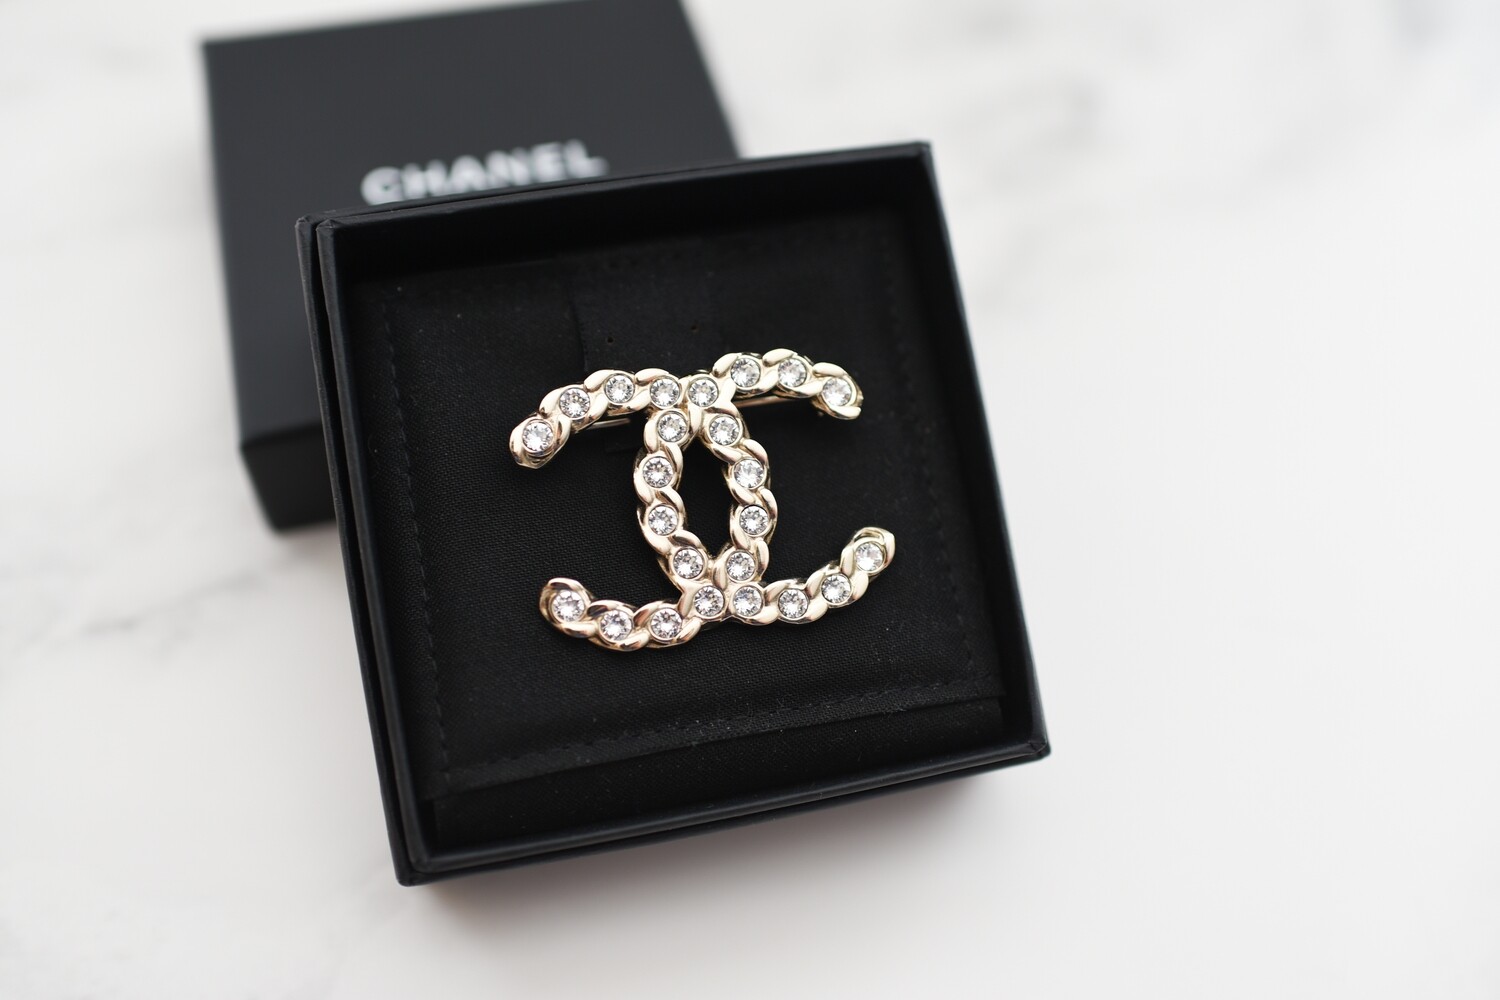 Chanel Crystal Brooch, Gold, New in Box GA001